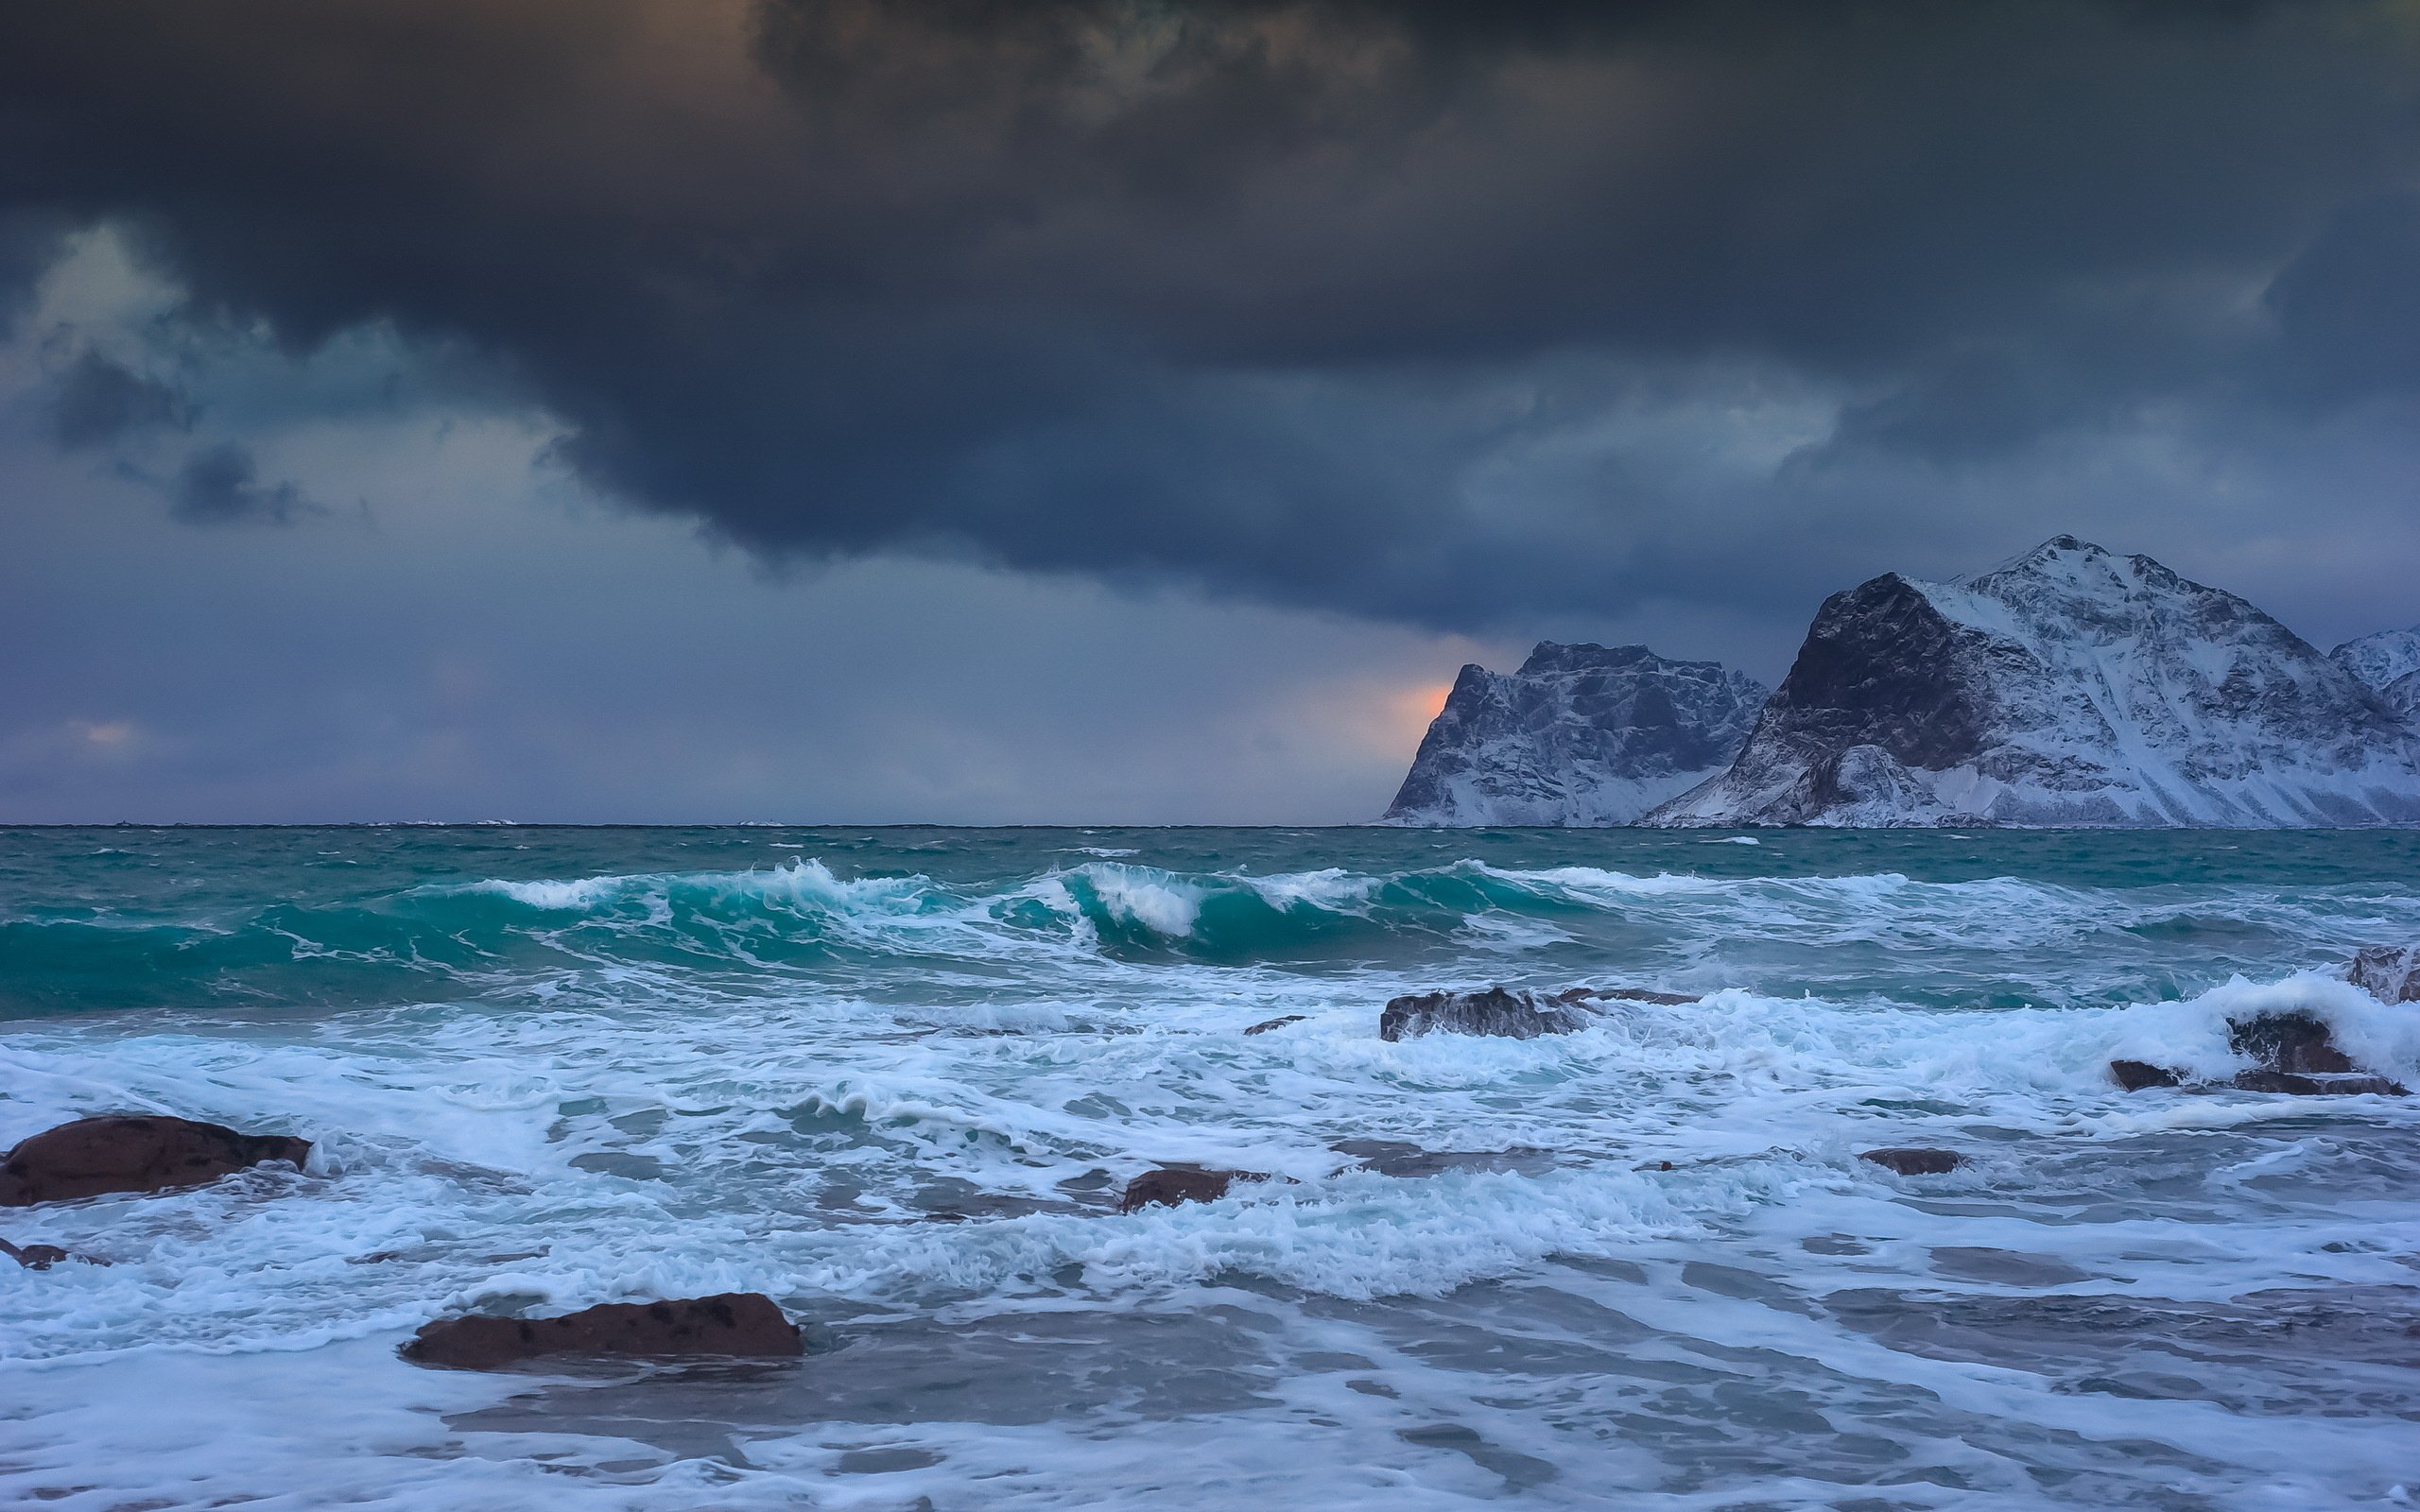 Берег океана в шторм. Бискайский залив шторм. Берингово море шторм. Исландия Атлантический океан берег шторм. Карибское море Атлантический океан.